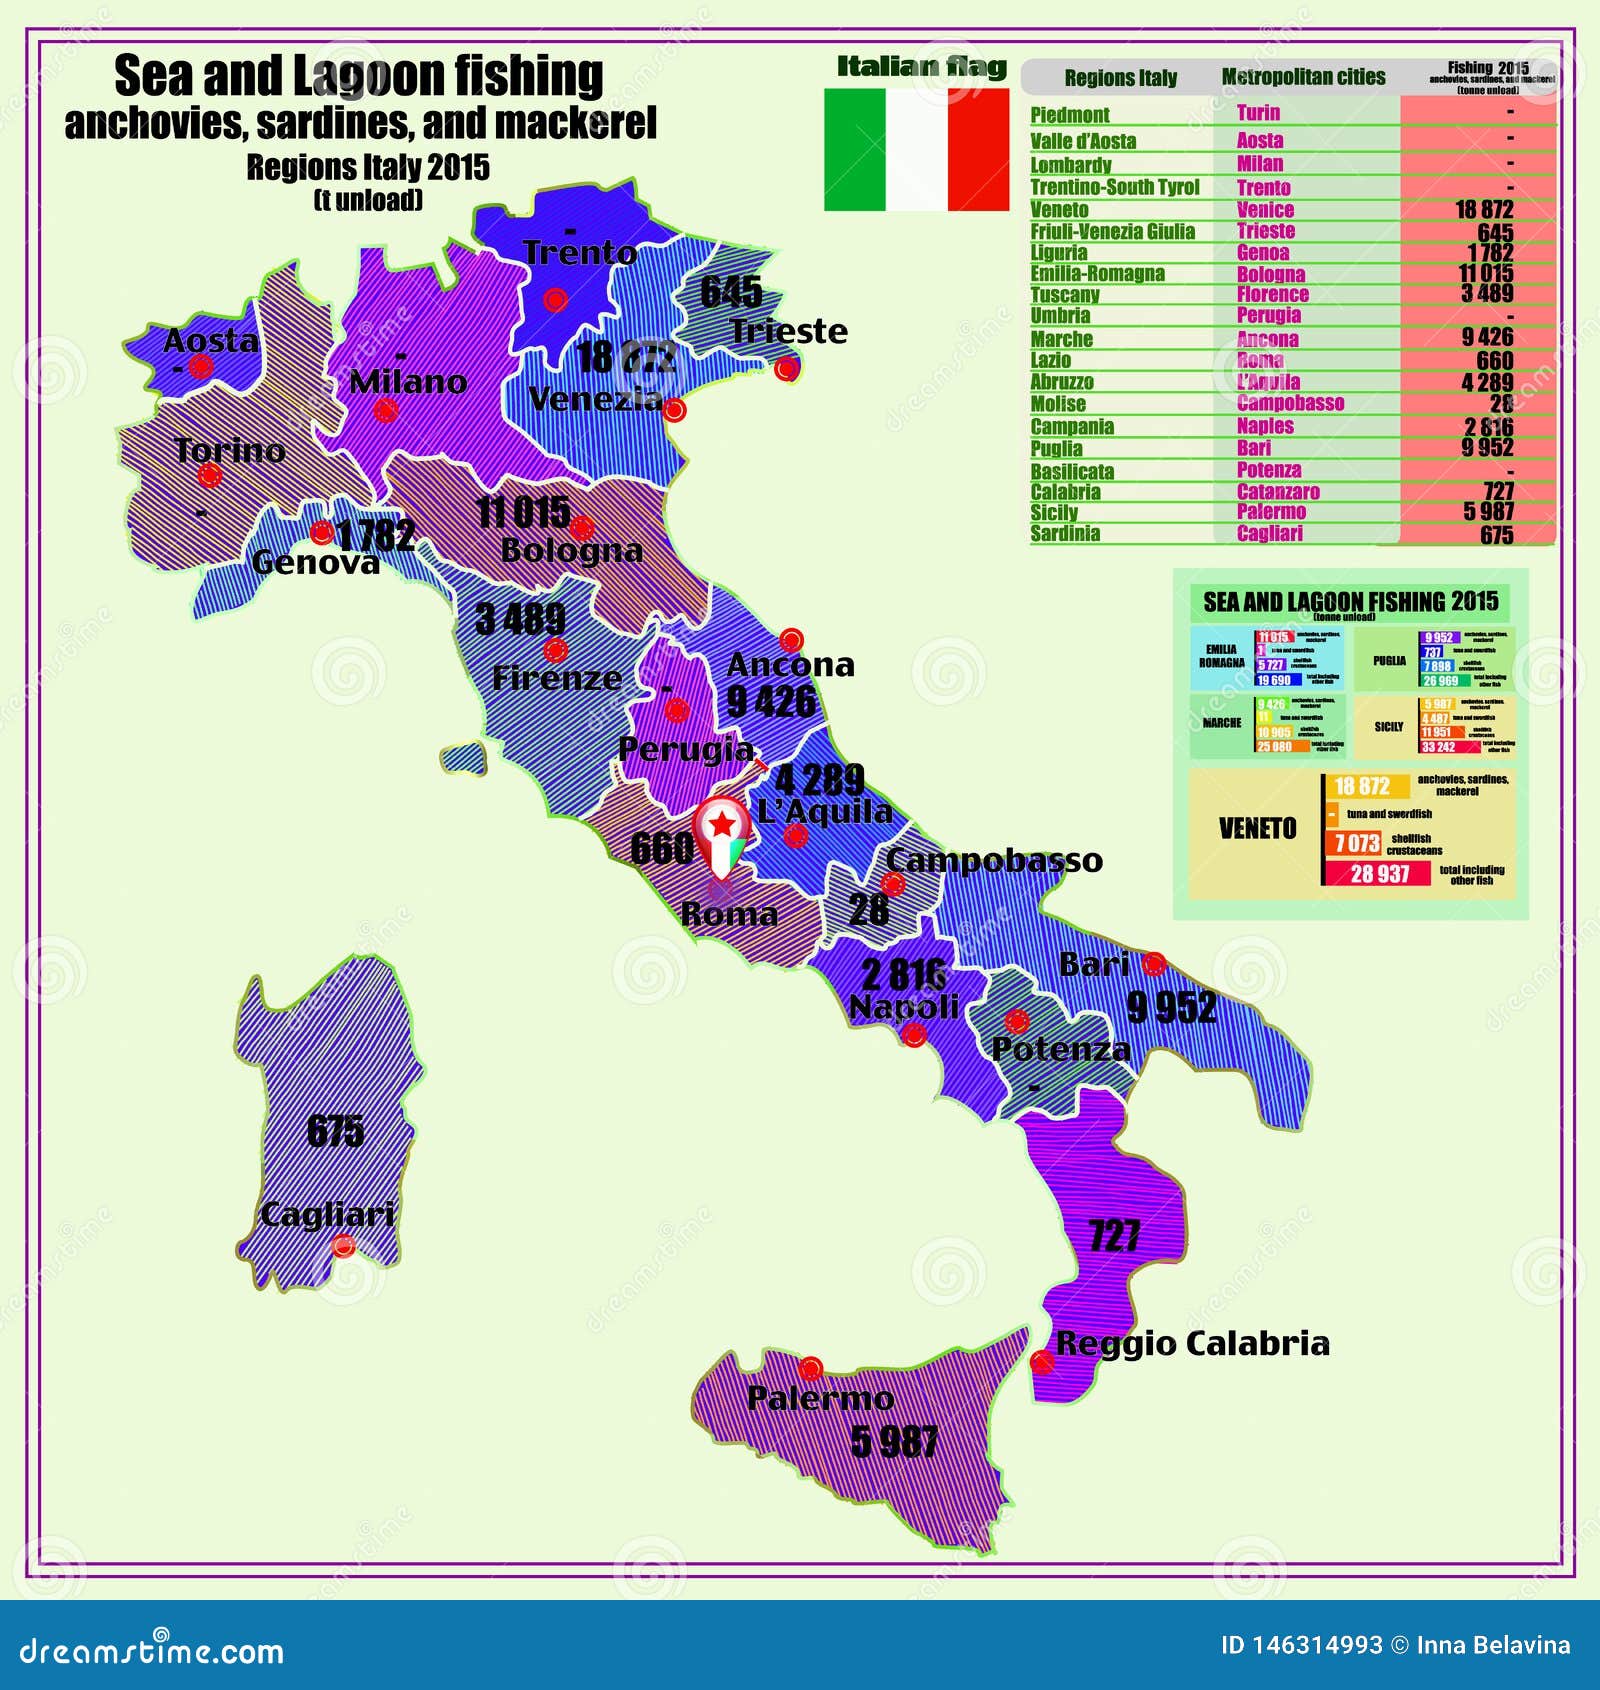 https://thumbs.dreamstime.com/z/italy-map-italian-regions-infographic-sea-lagoon-fishing-major-cities-informations-year-146314993.jpg